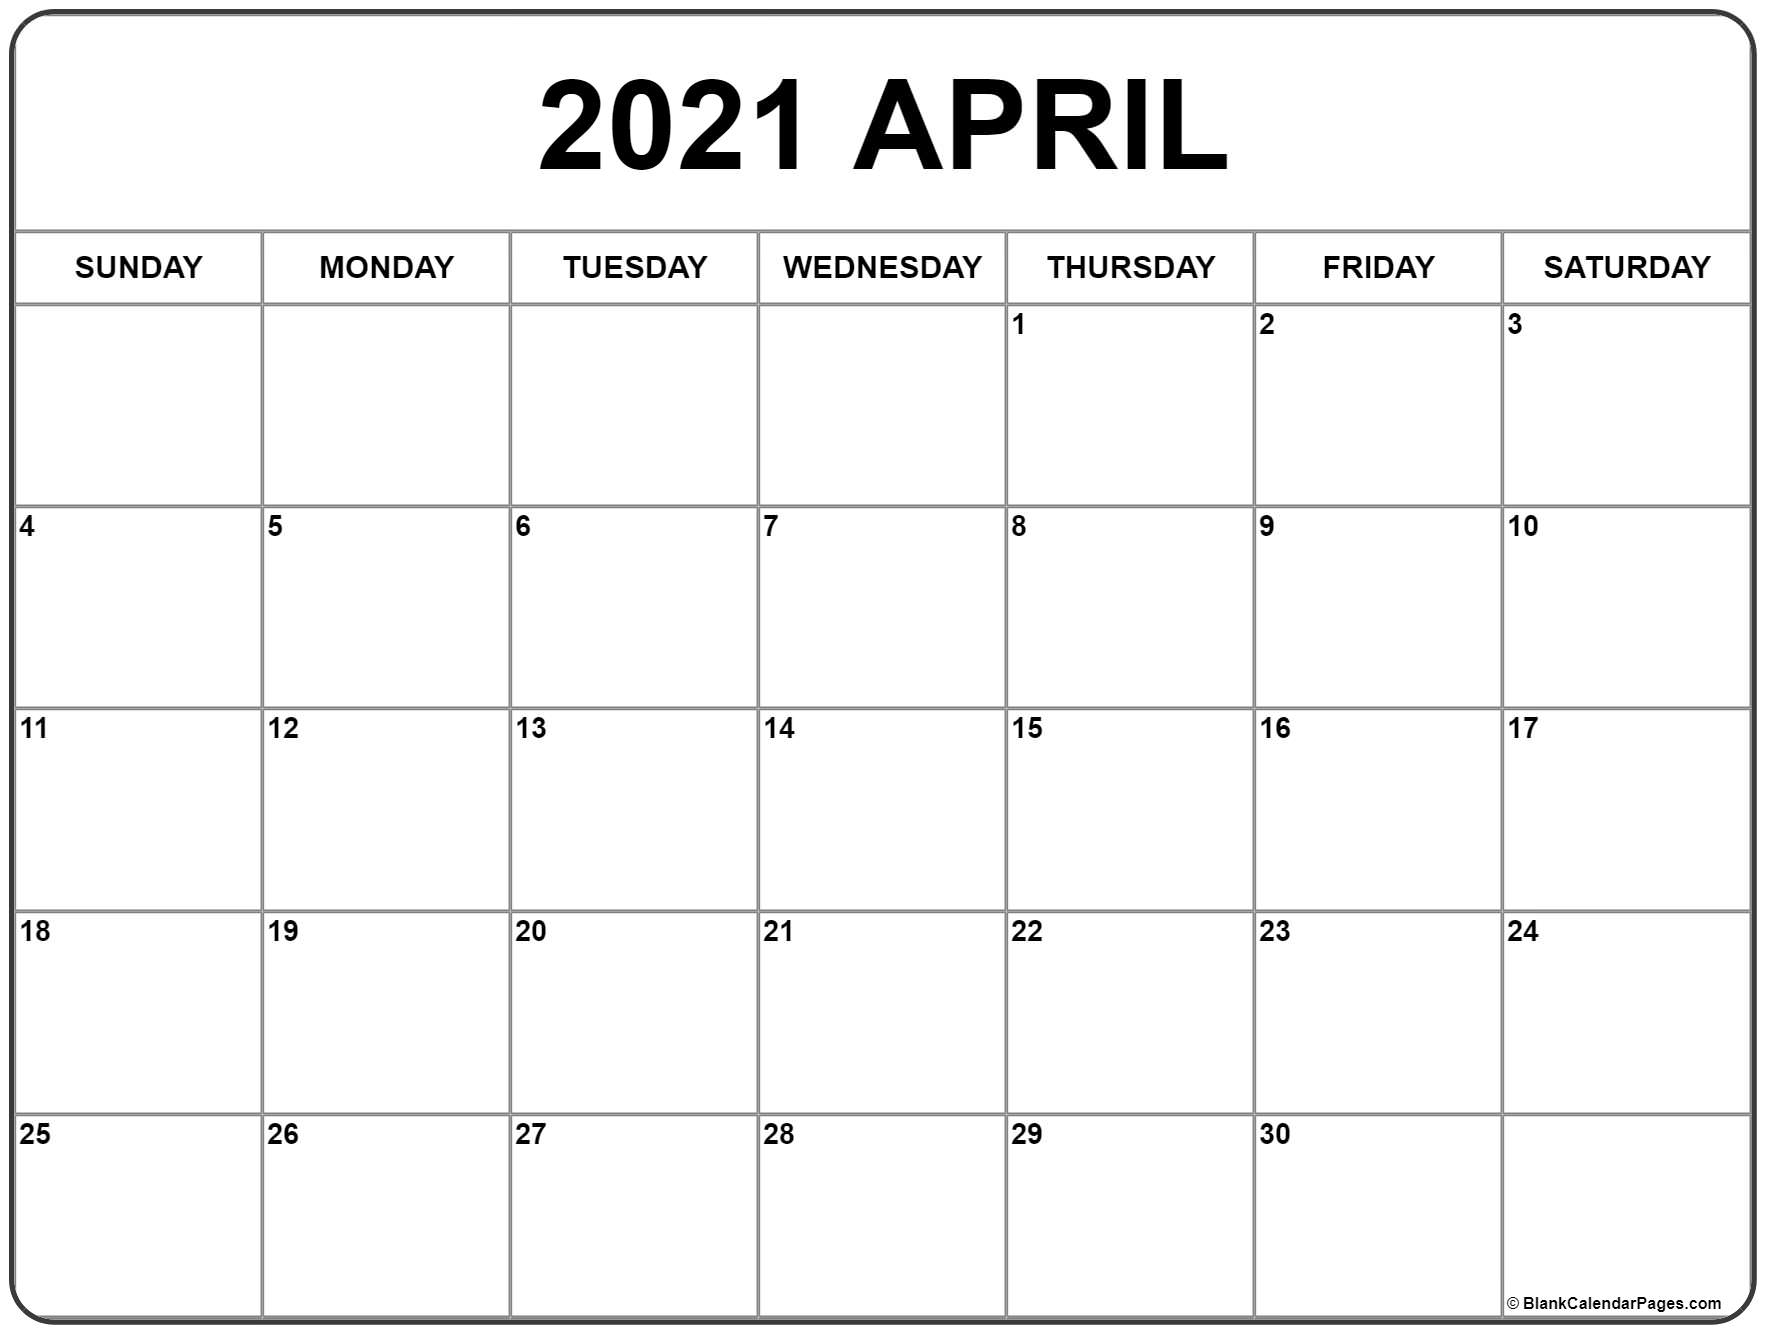 Catch Calendar 2021 Jan Feb Mar April